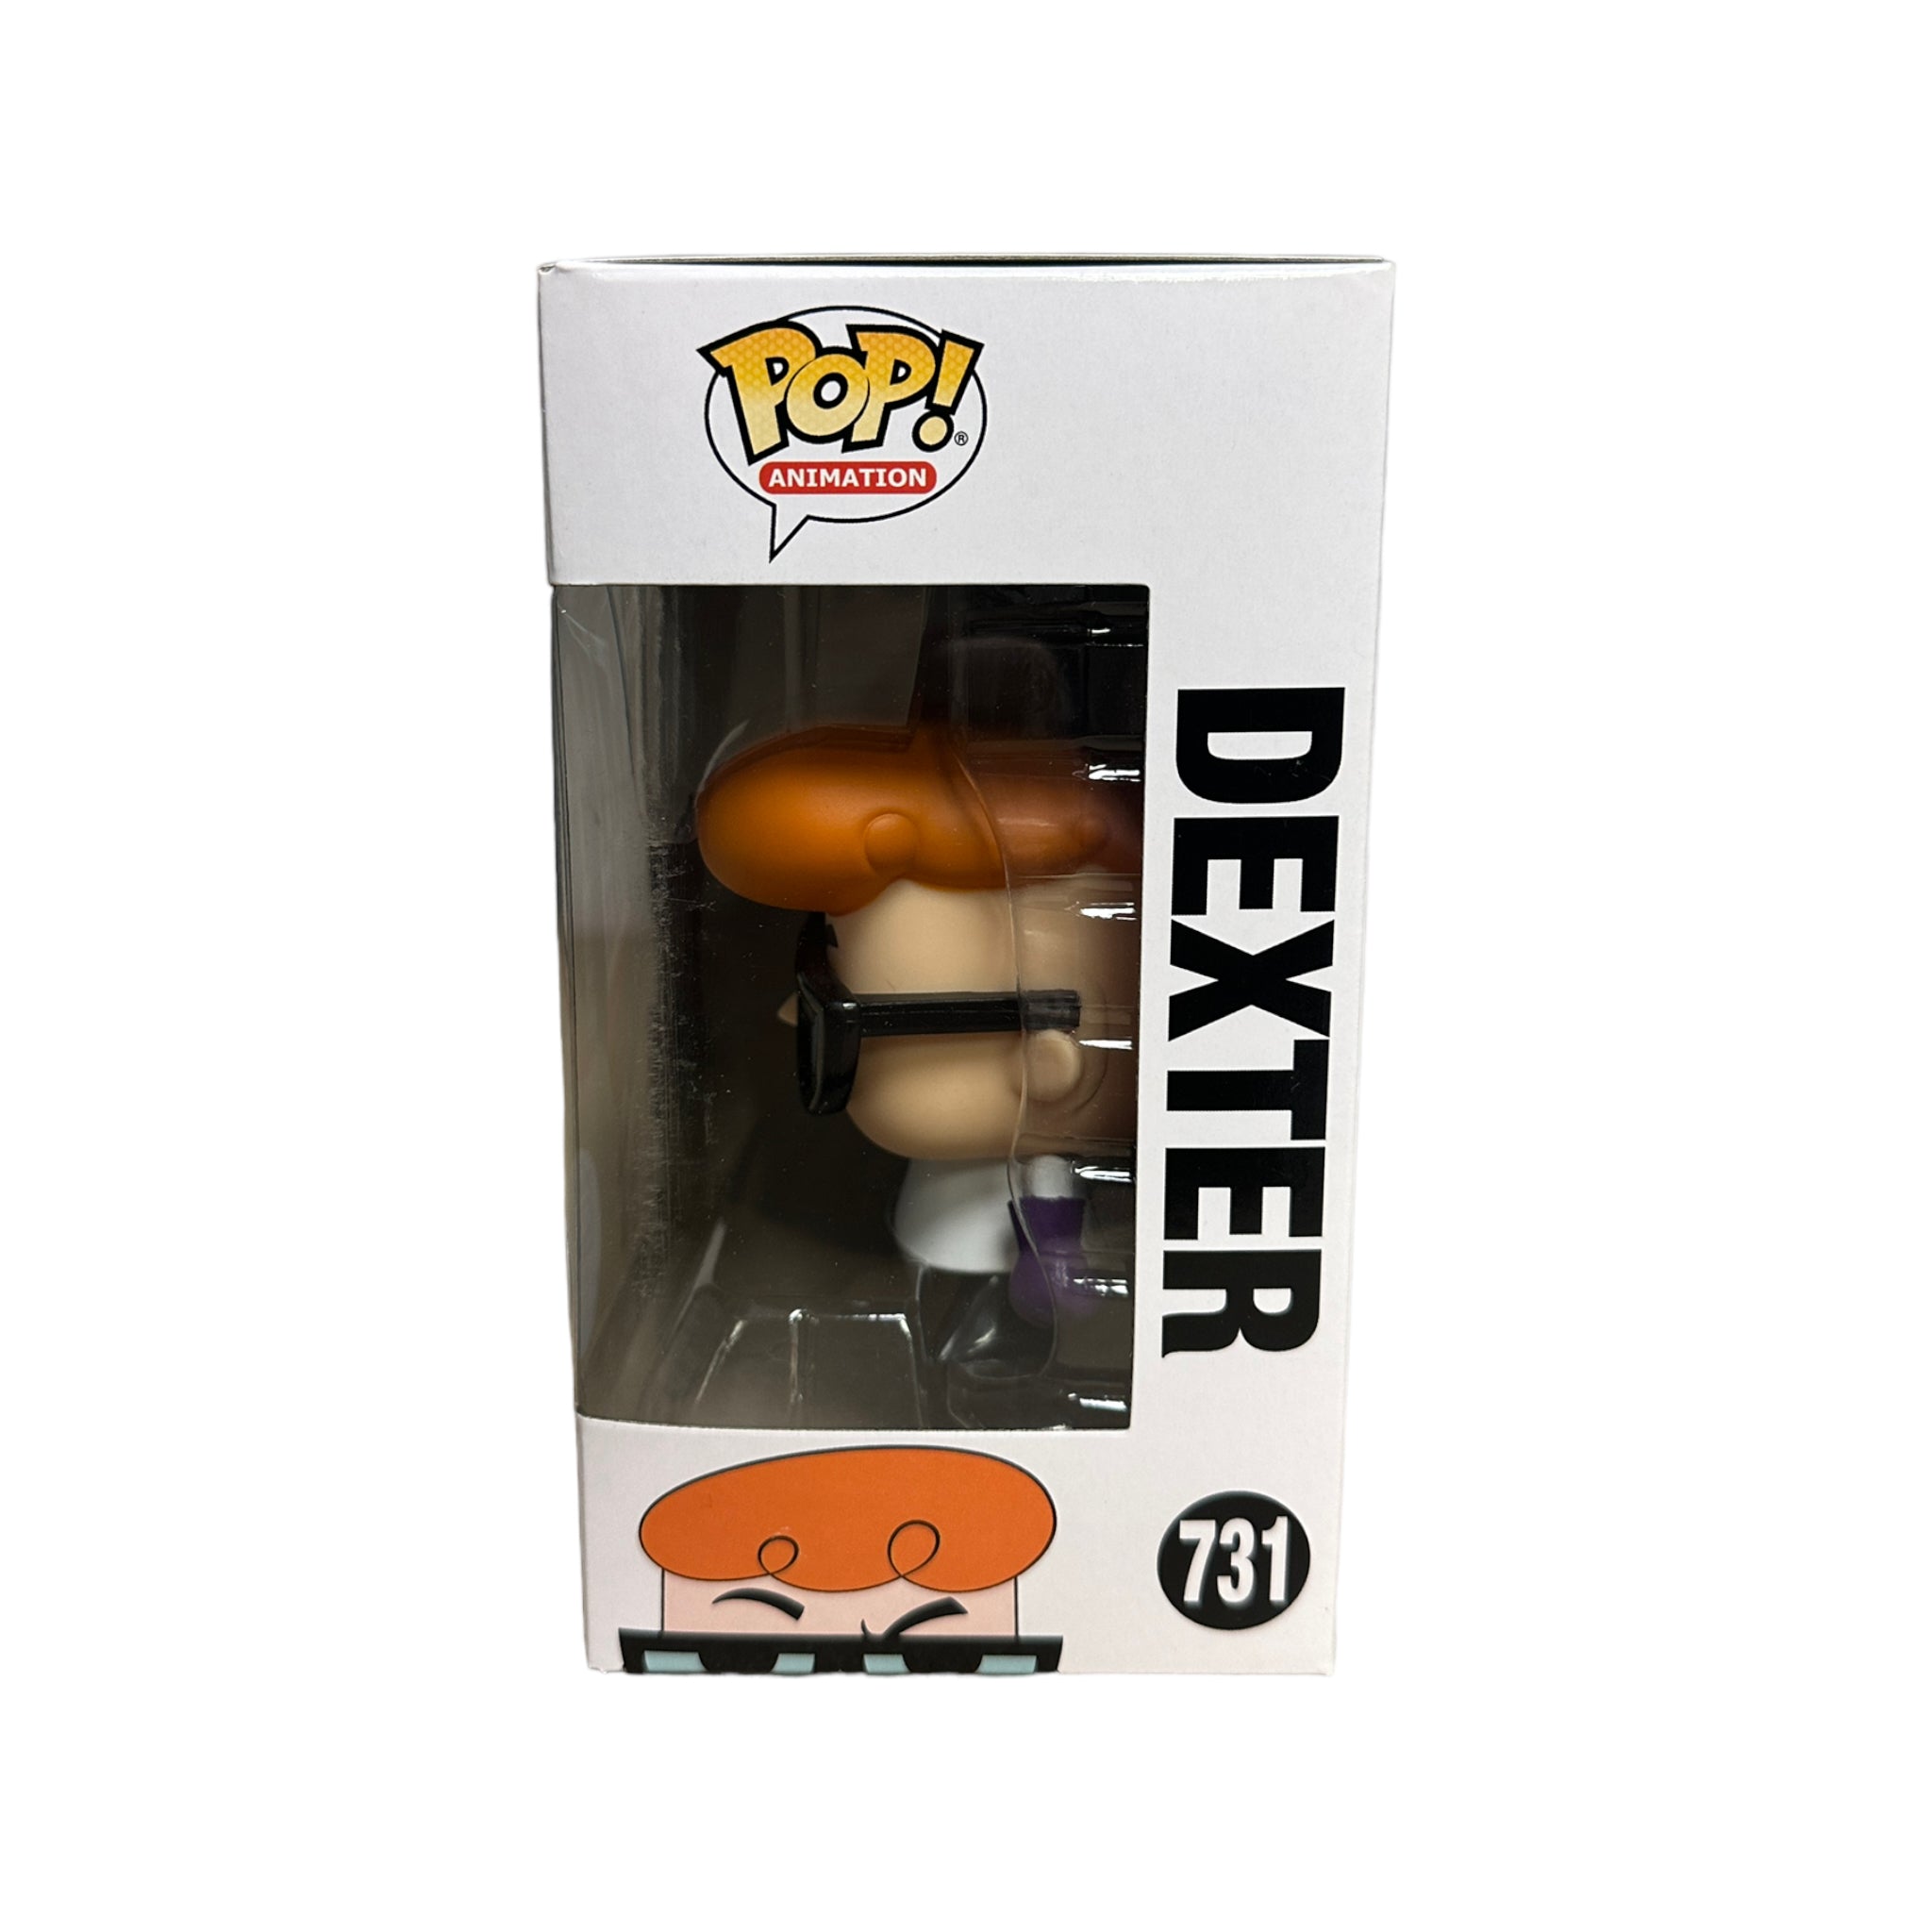 Dexter #731 Funko Pop! - Dexter's Laboratory - Funko Shop Exclusive - Condition 8.5/10